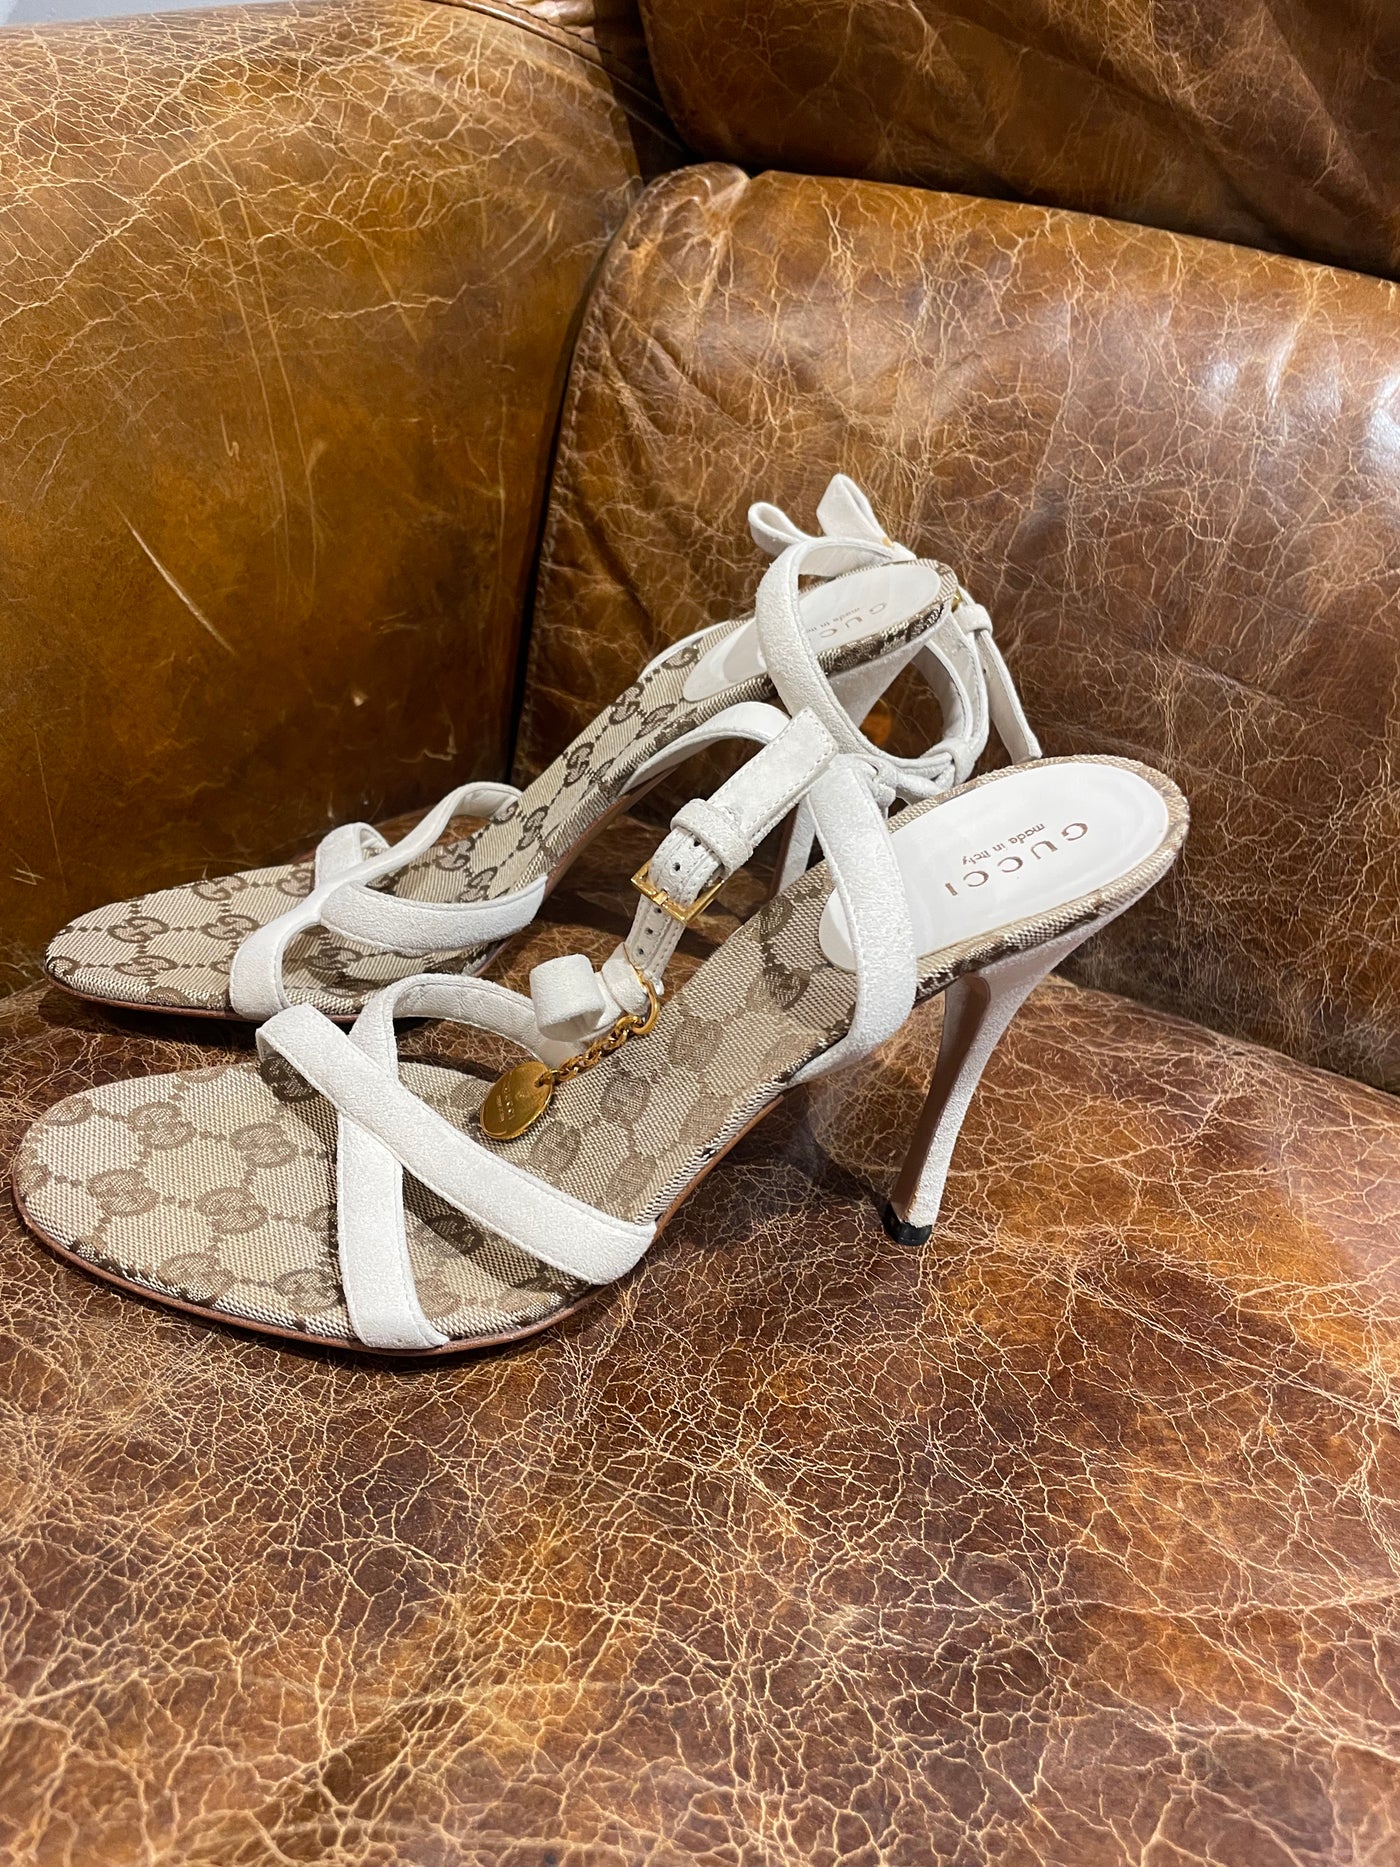 Gucci beige Suede heels size 39